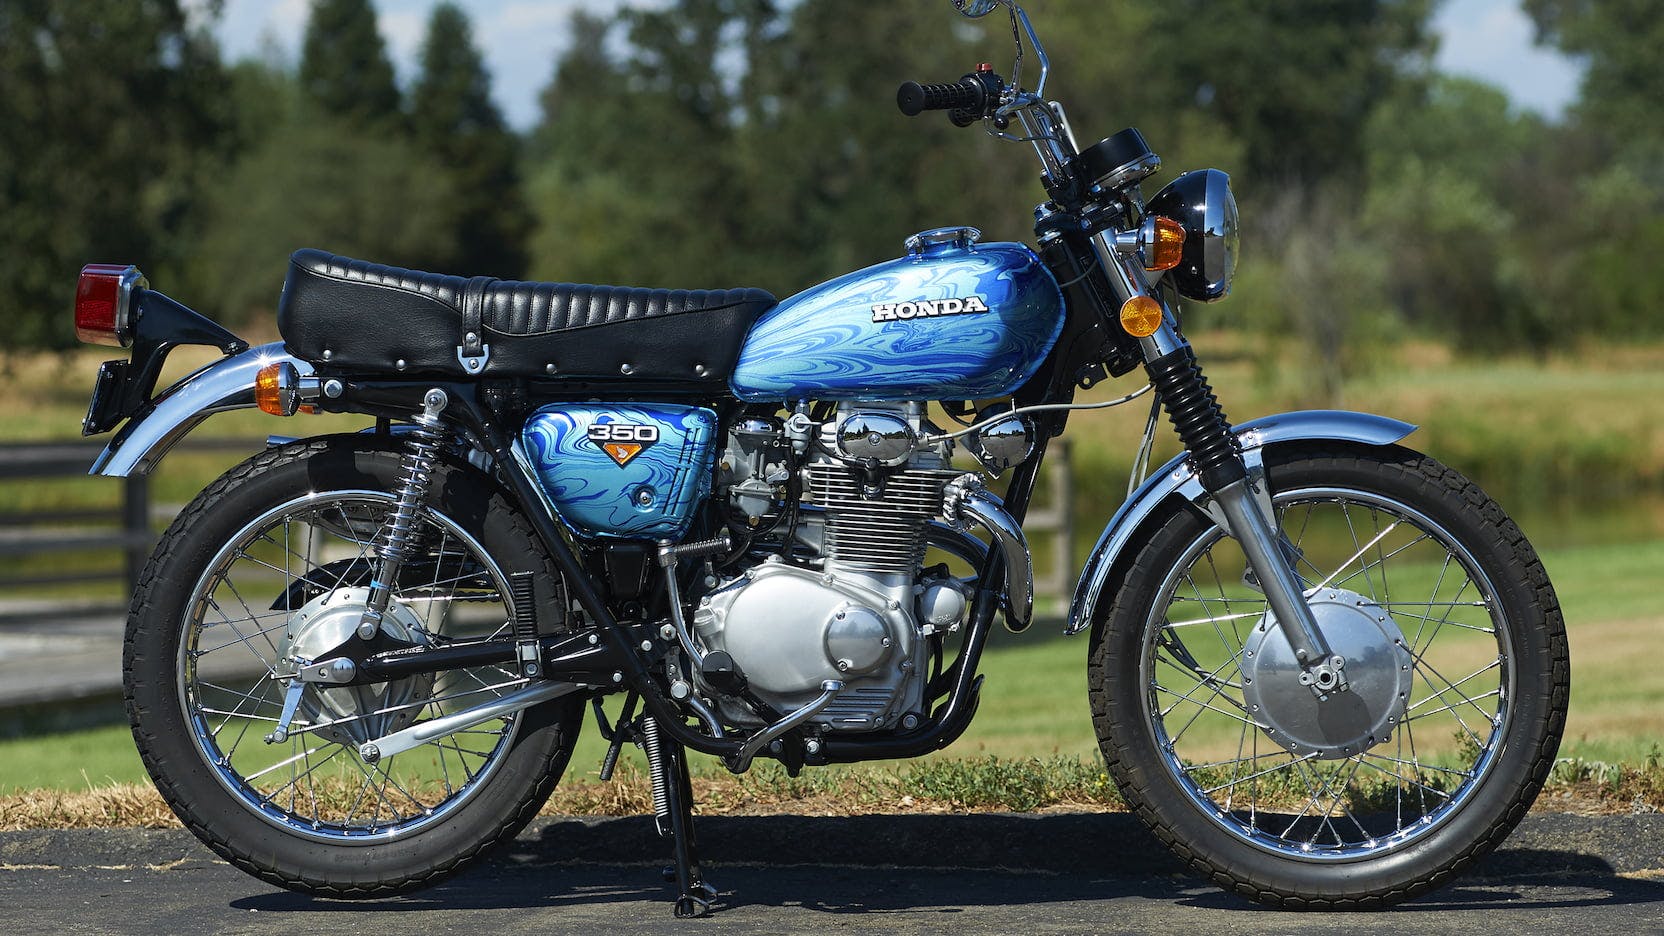 Honda Blue Dragon motorcycle side profile